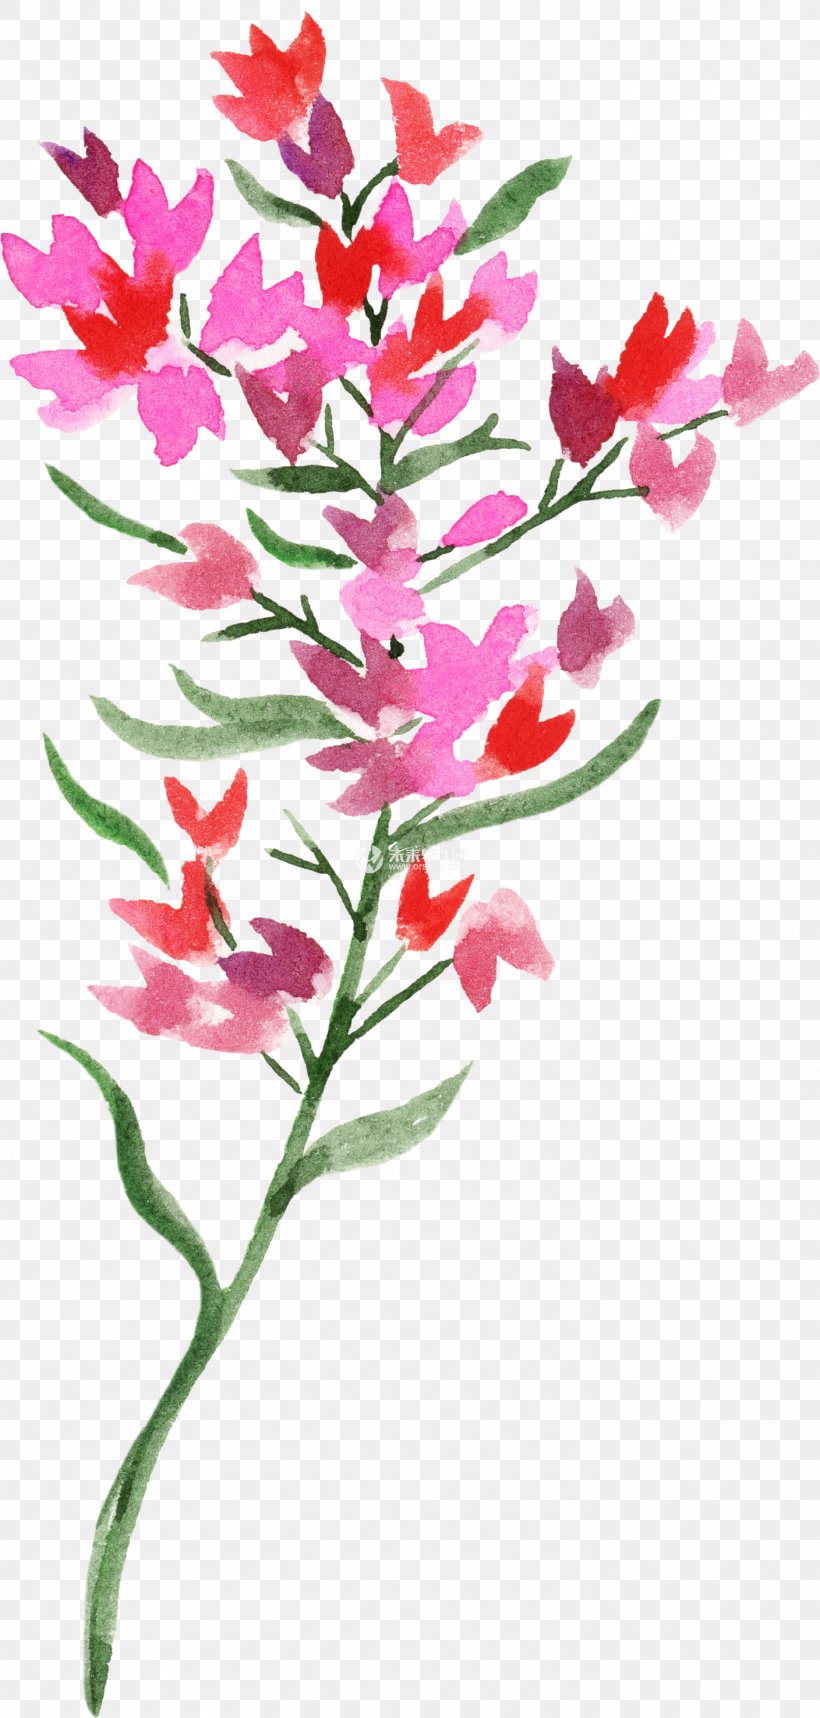 Watercolor Painting Floral Design Flower Image, PNG, 1408x2950px, Watercolor Painting, Branch, Cut Flowers, Flora, Floral Design Download Free